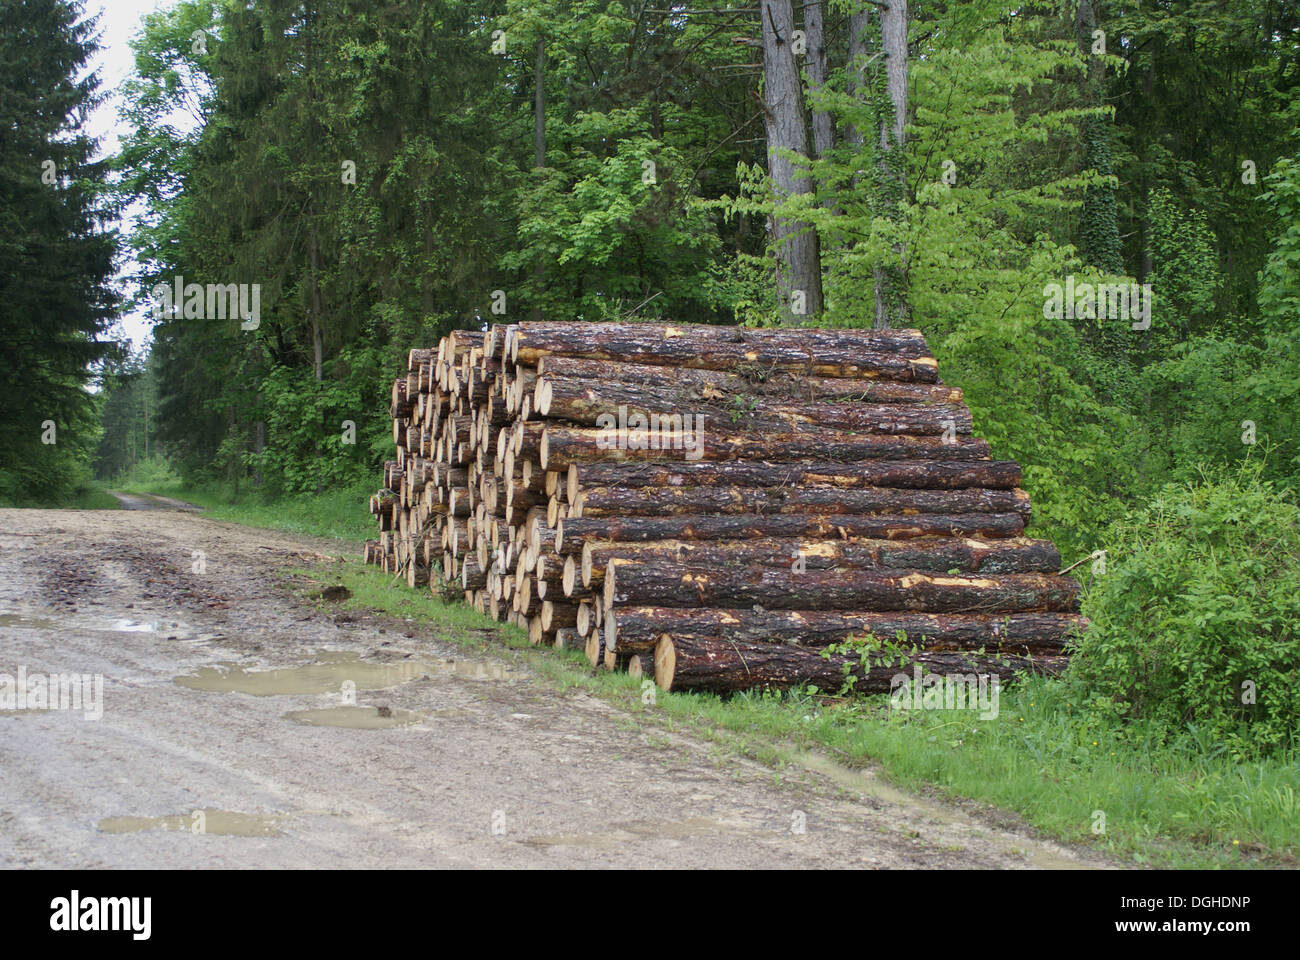 Protokoll-Stapel im Wald Störung der ersten Weltkrieg Schlachtfeld verursacht durch Baum Extraktion Verdun Schlachtfeld Verdun Maas Stockfoto